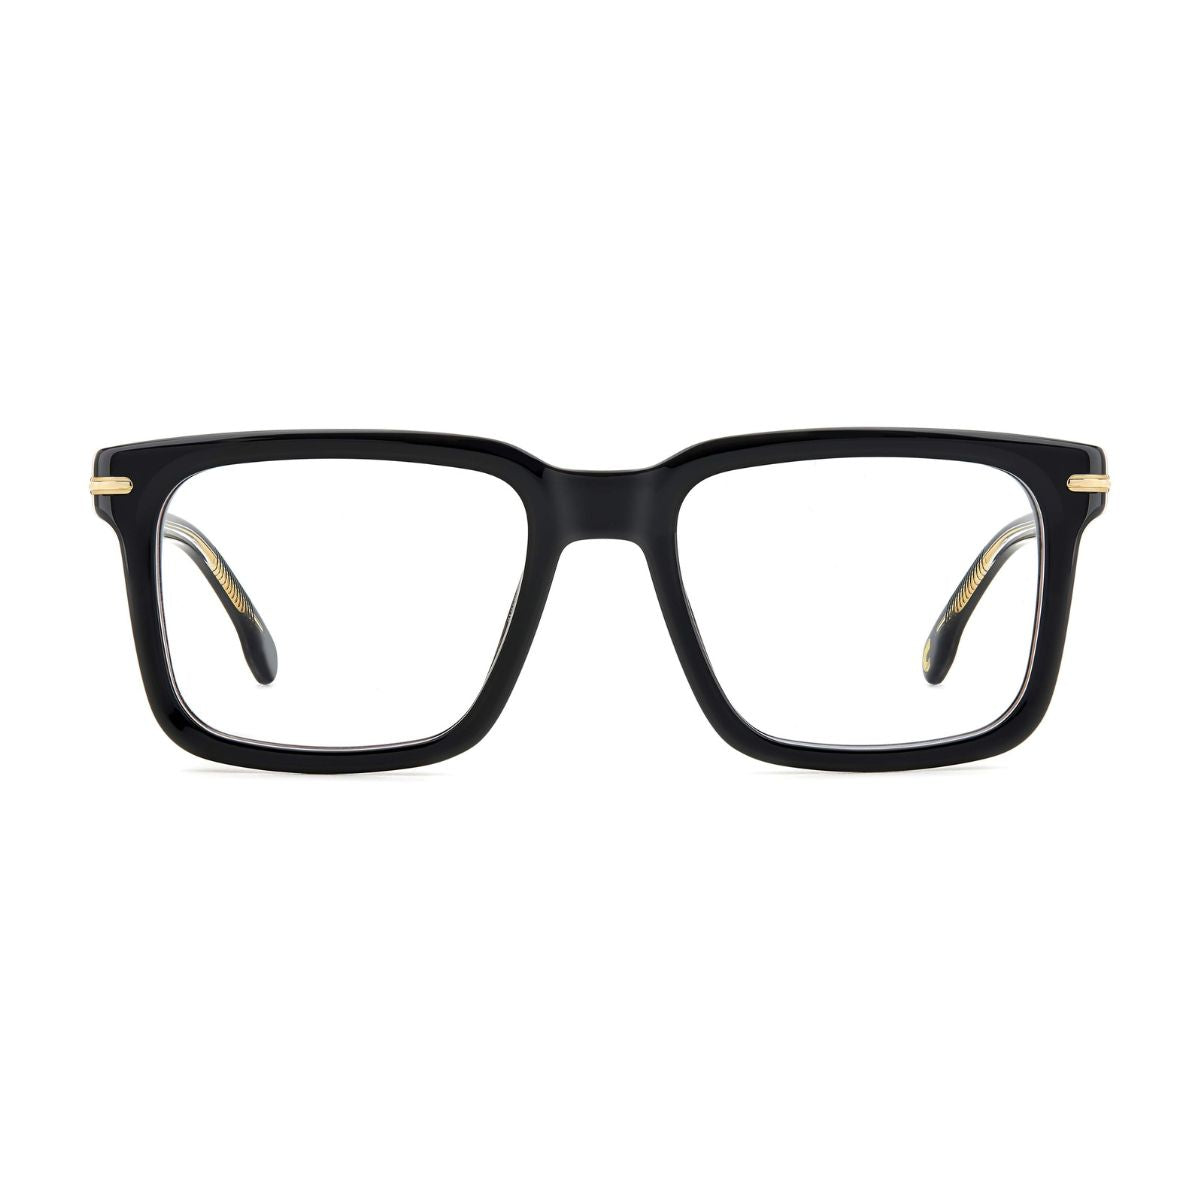 "Carrera 321 M4P prescription glasses frame for men's online at optorium"